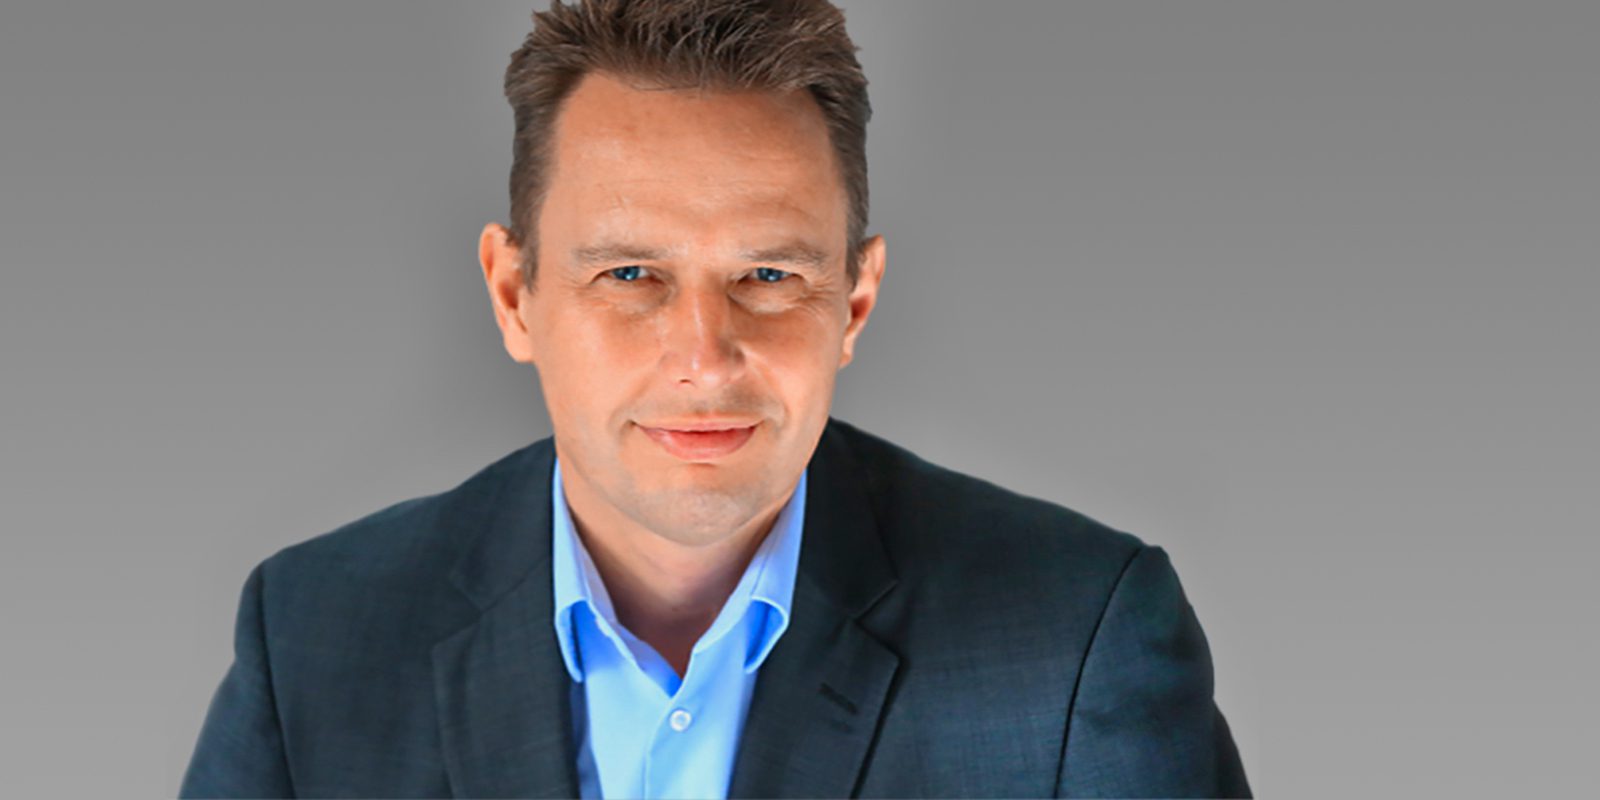 New COO Carsten Dirks strengthens management